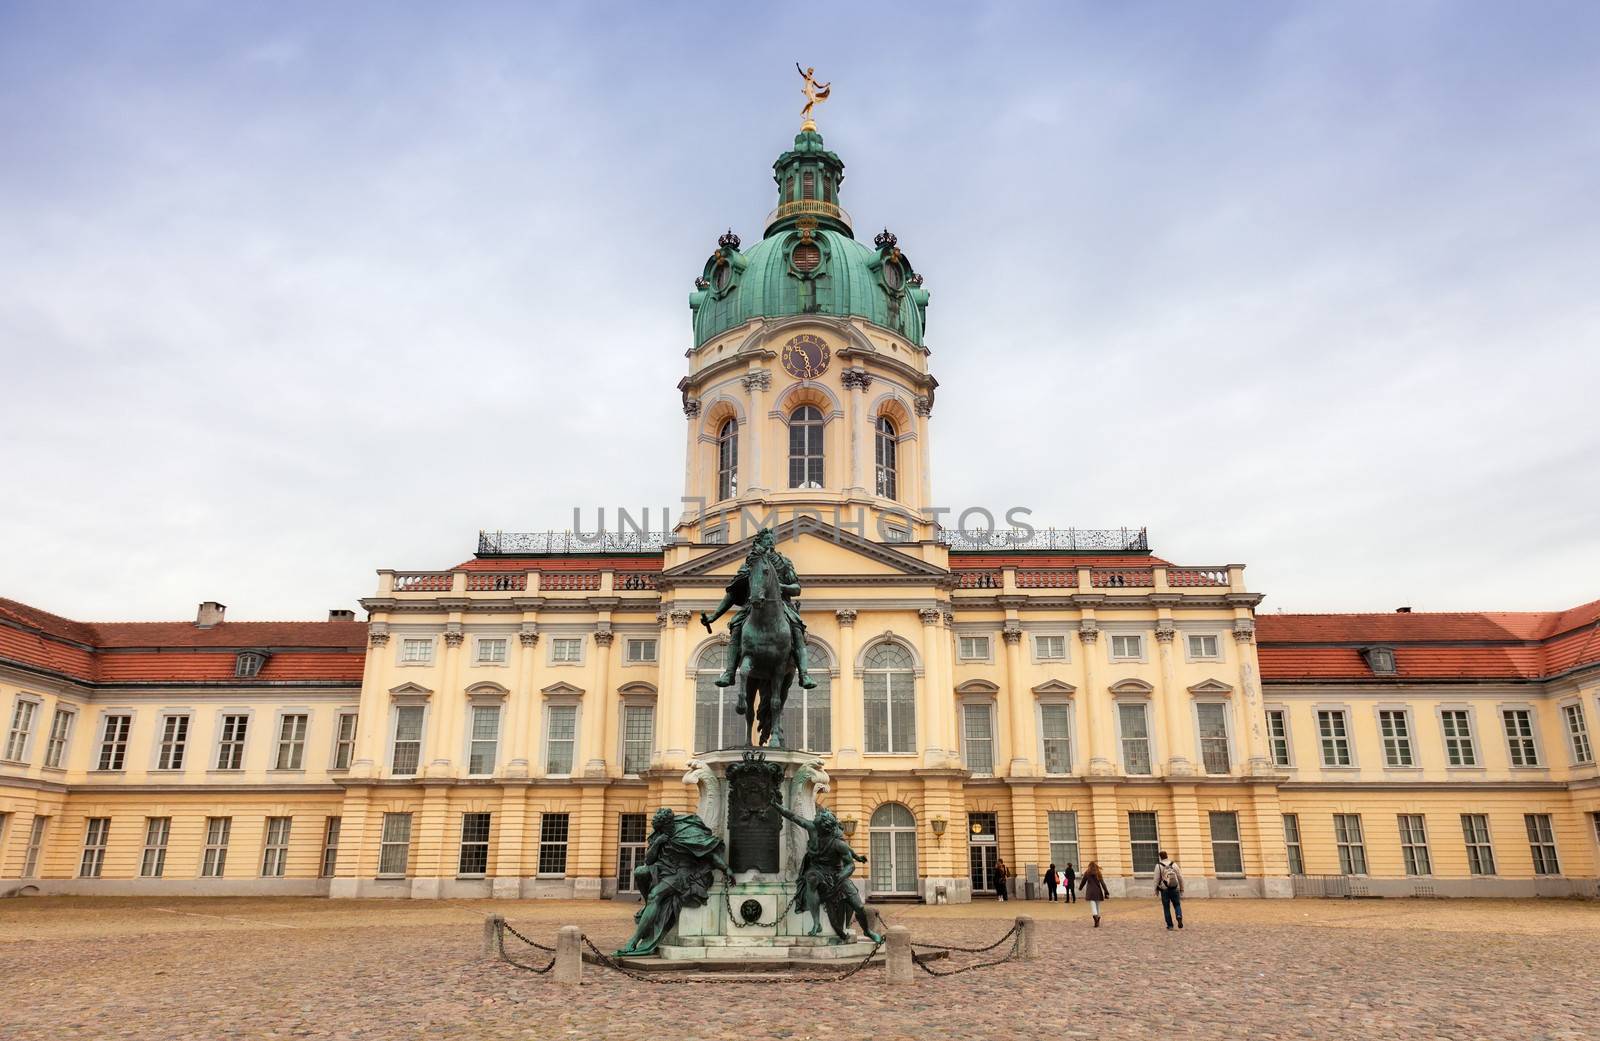 Schloss Charlottenburg (charlottenburg palace) in Berlin, Germany